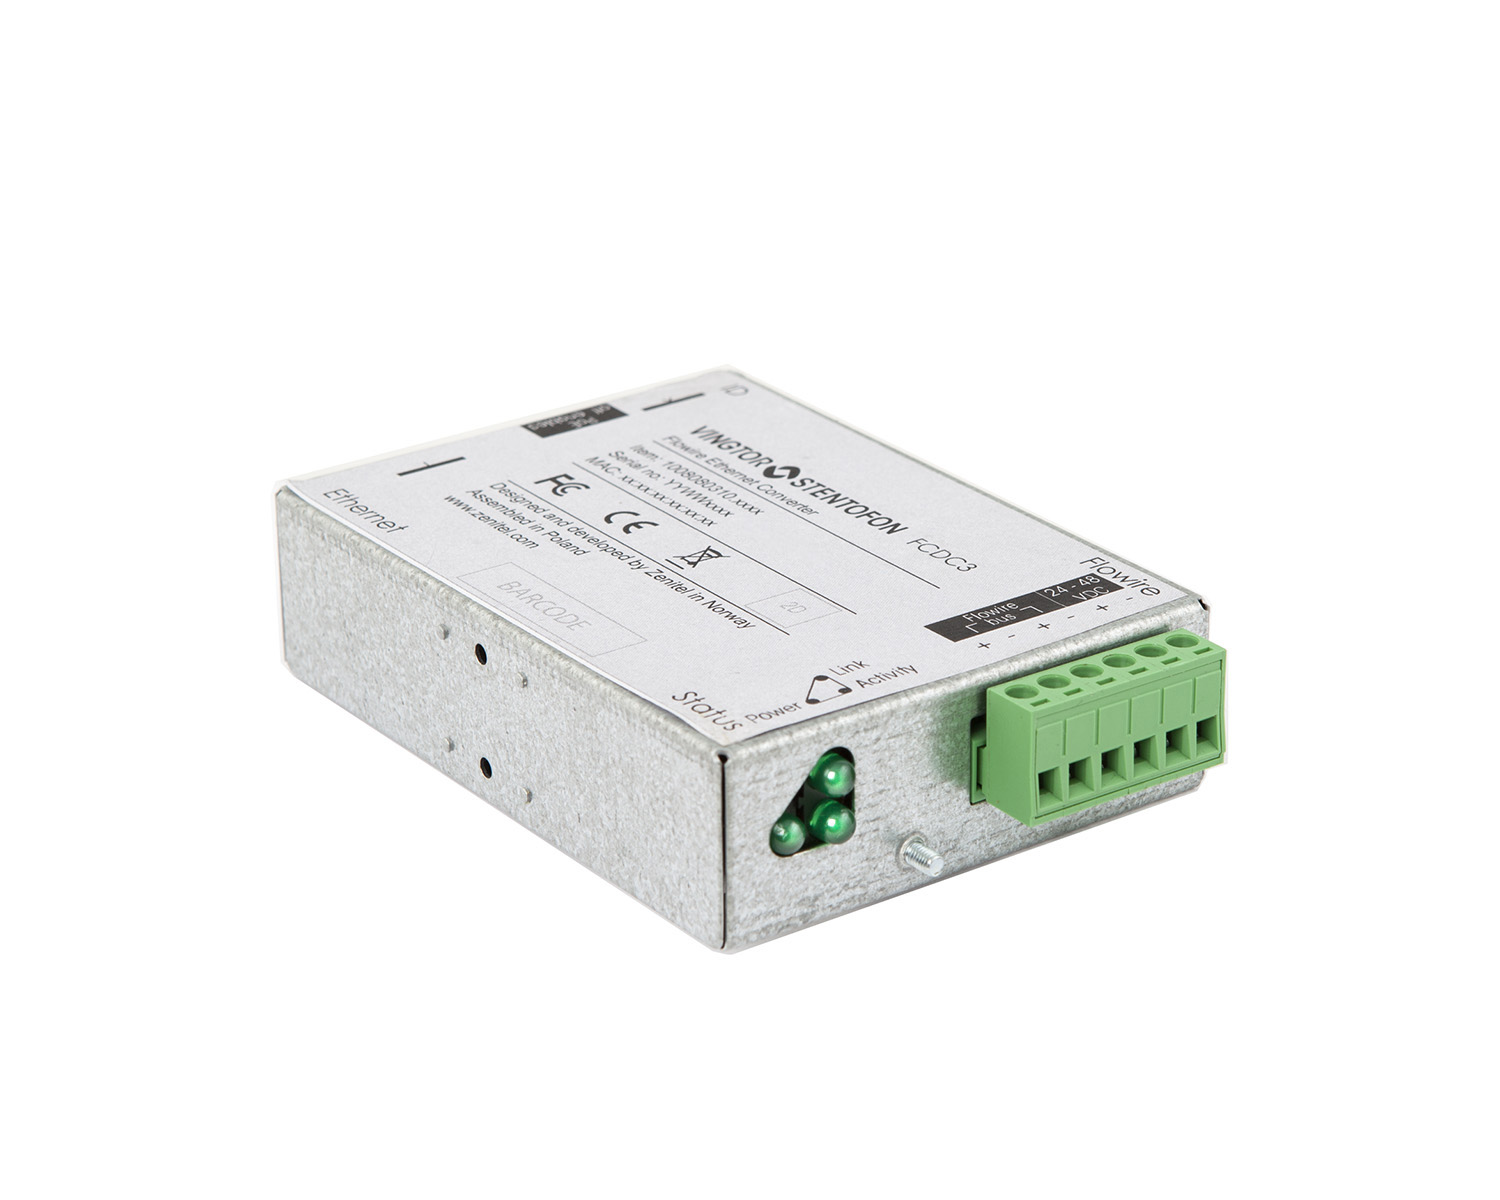 FCDC  Flowire Ethernet Converter - DC Voltage - 1008080310 